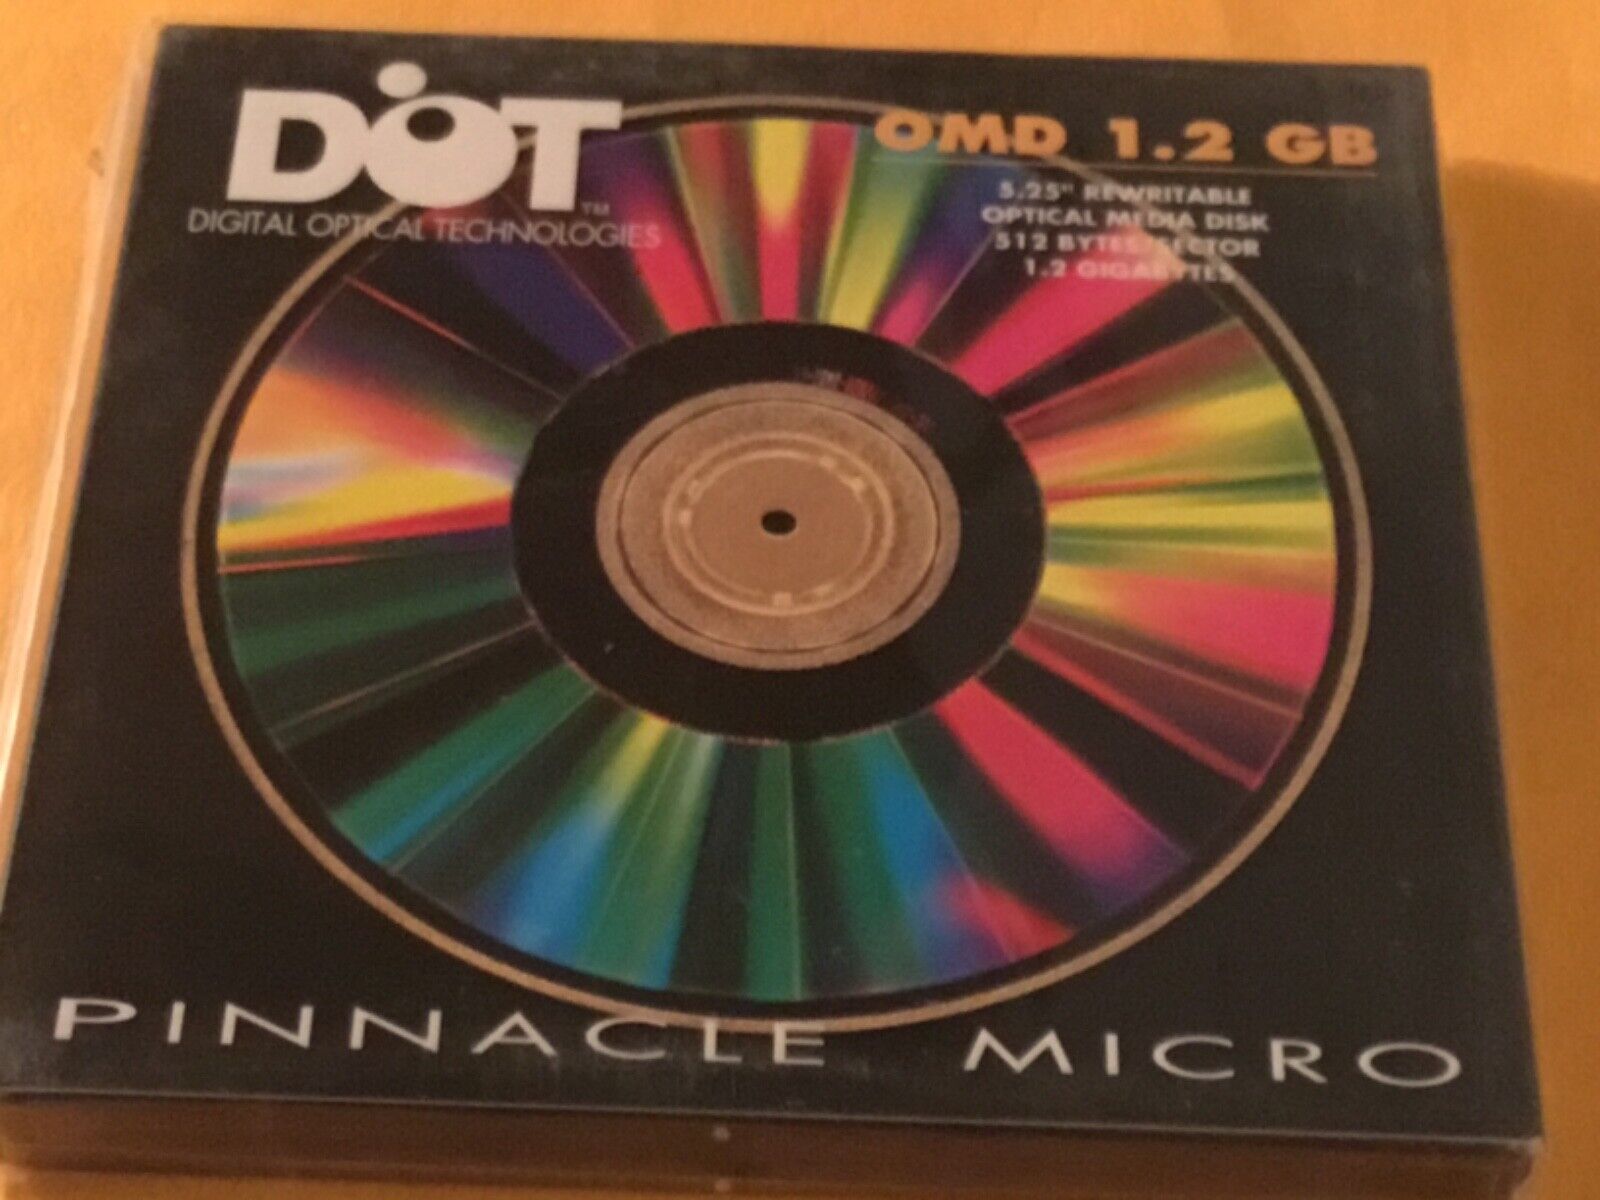 New Lot of 5 Pinnacle Micro 5.25 Rewritable Optical Disks 1.2gb 512 bytes/sector Pinnacle Micro 293700